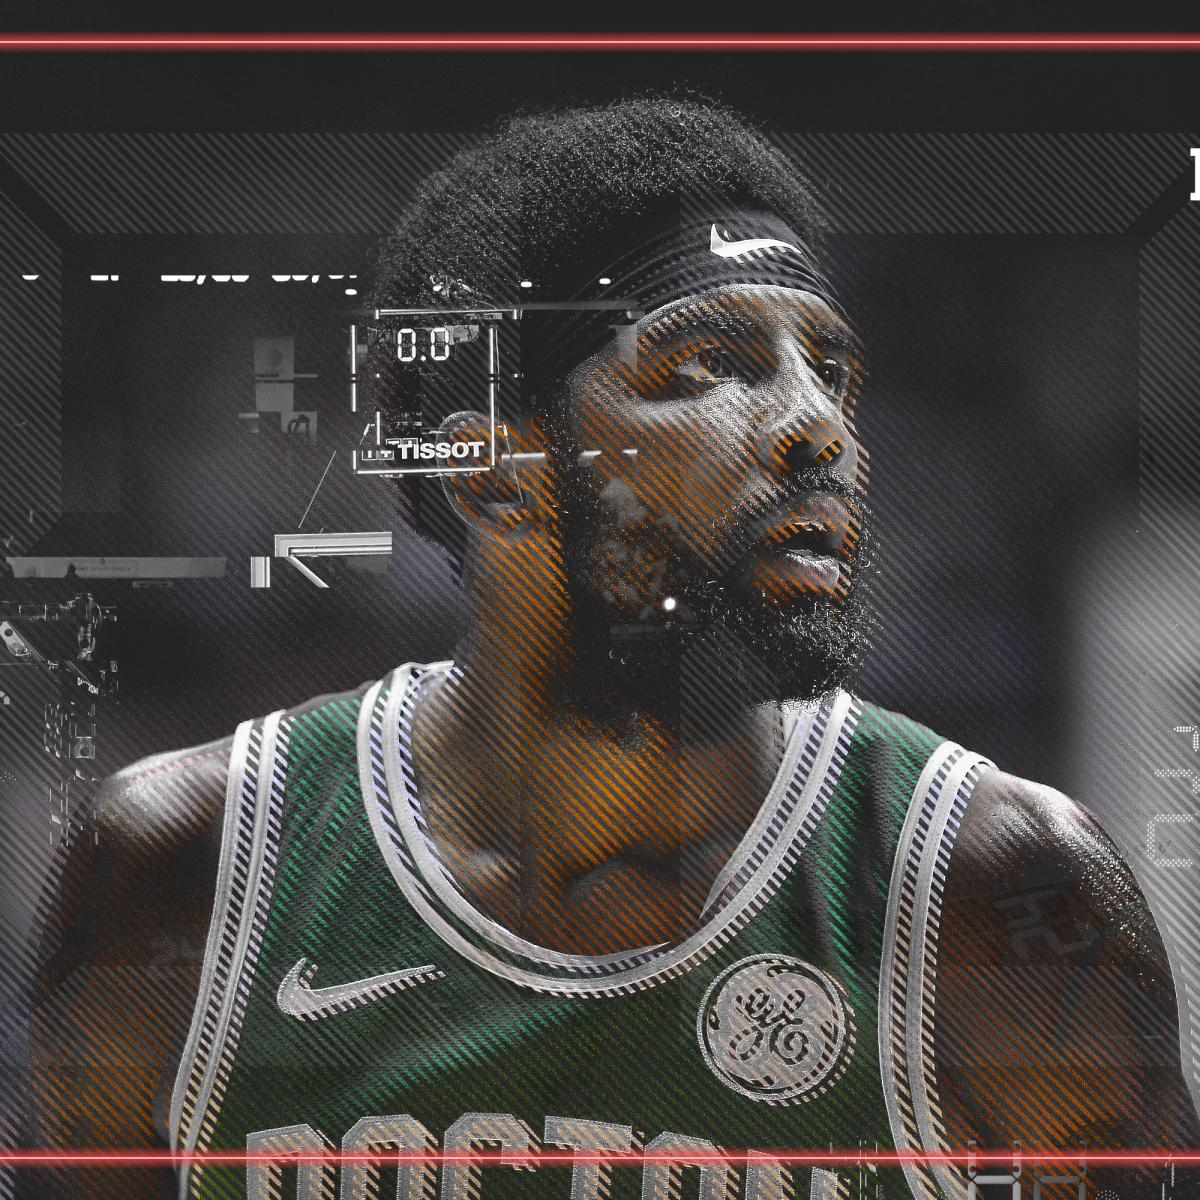 Boston Celtics Big & Tall, Celtics Big & Tall Clothing, Extended